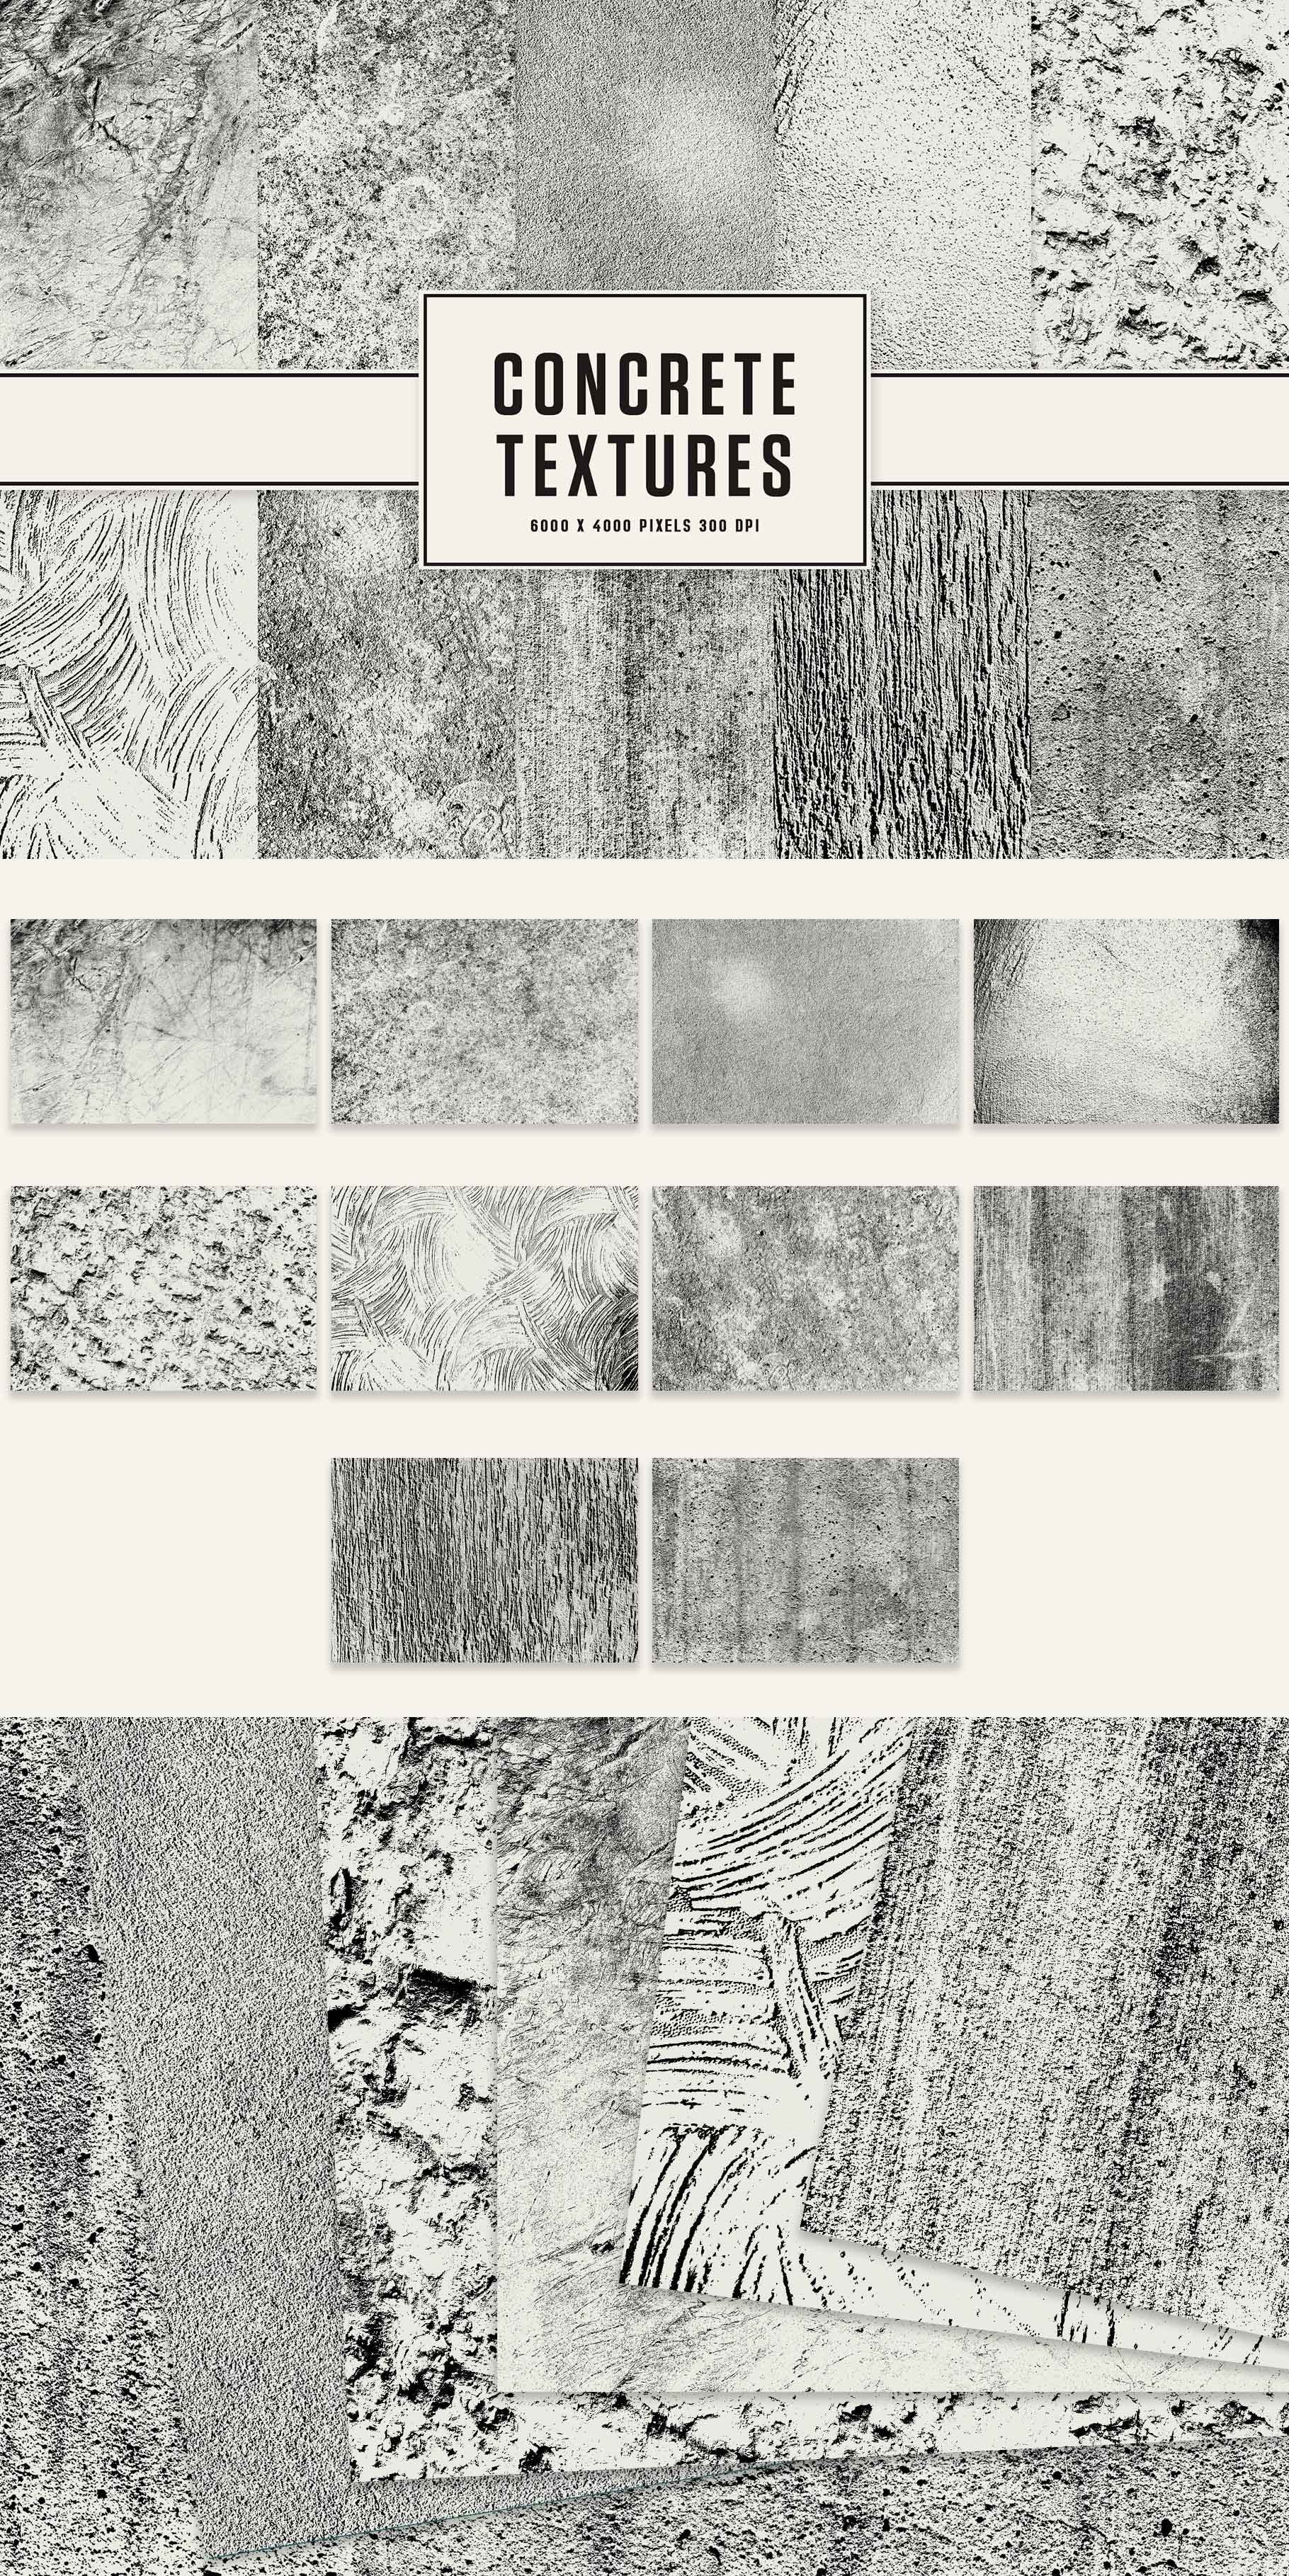 Concrete Textures cover image.